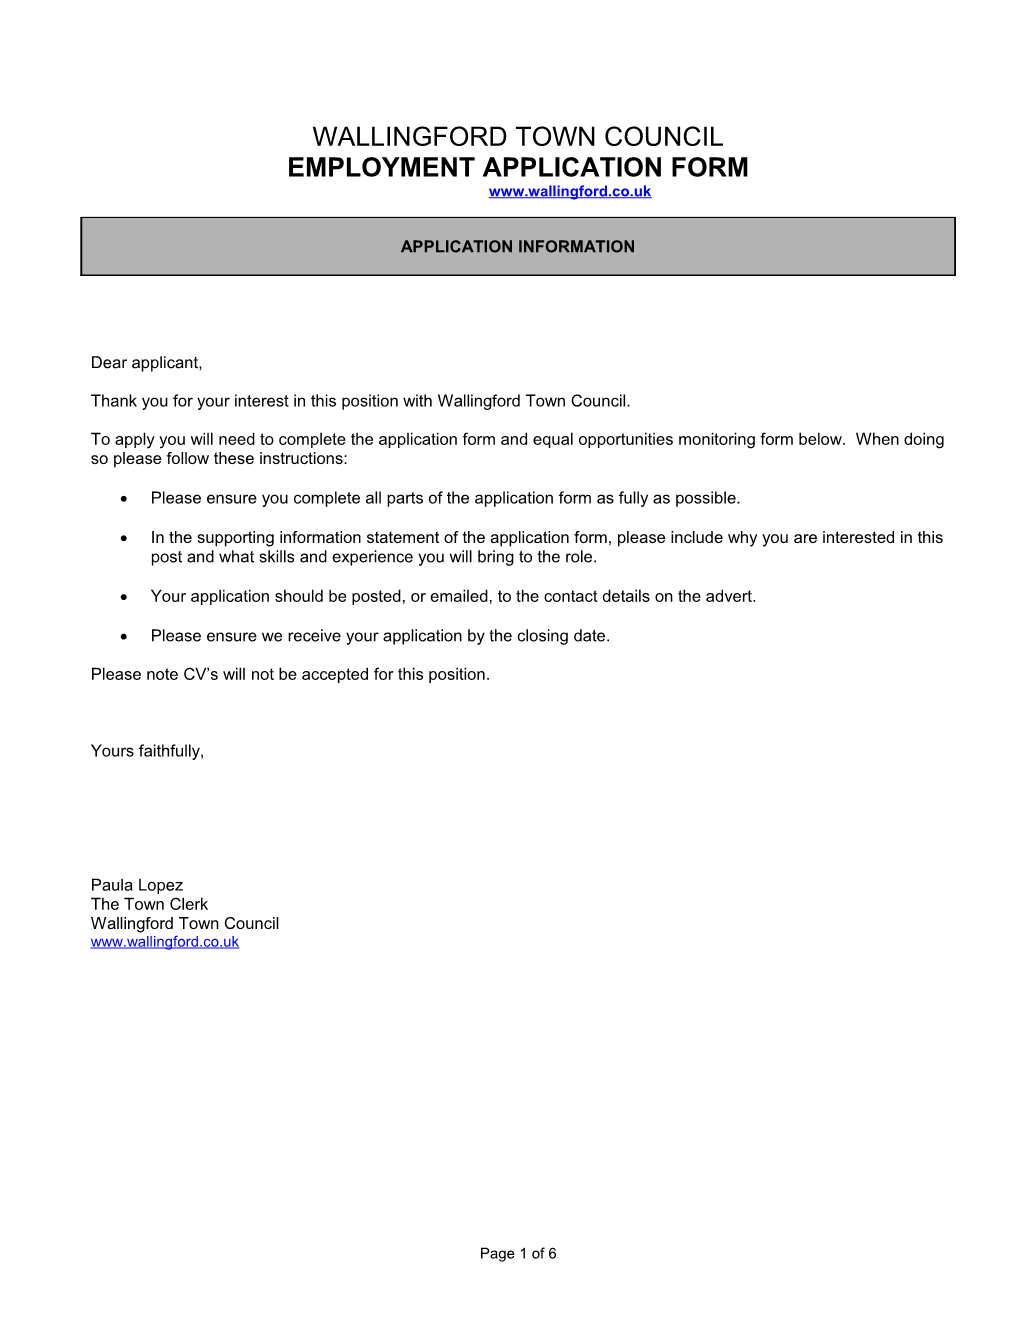 ATG Employment Application Form